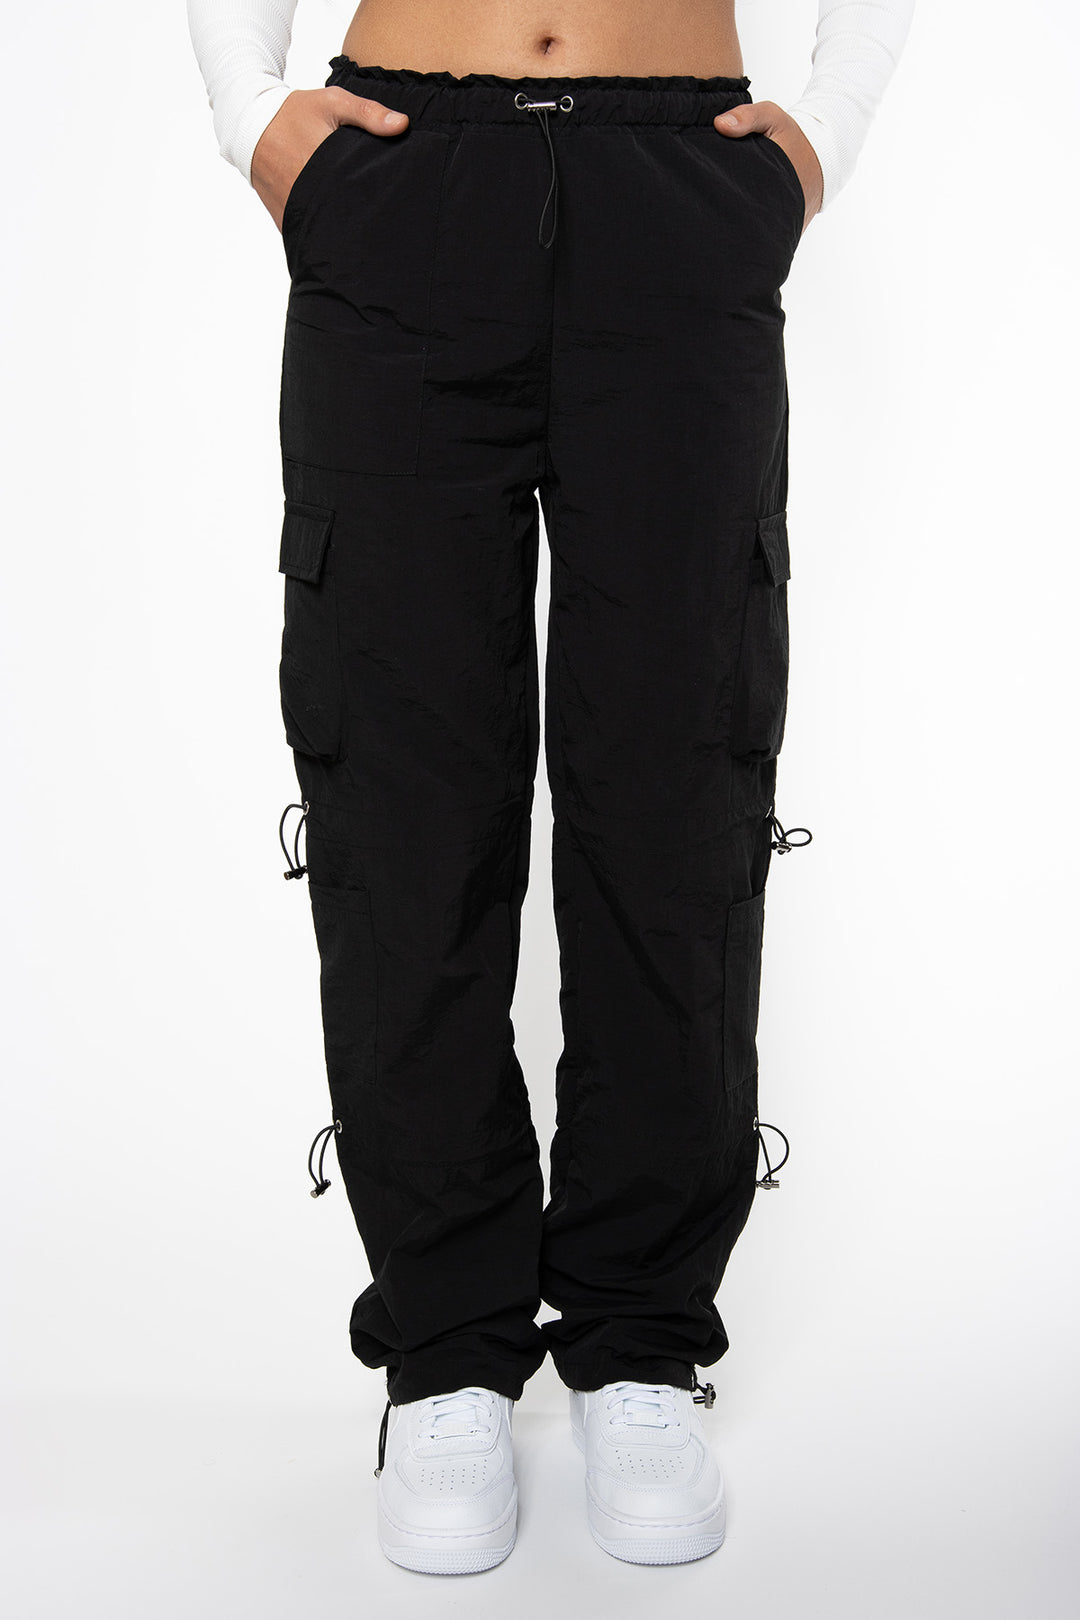 Addilyn Cargo Parachute Pants - Black Pants Routines Fashion   